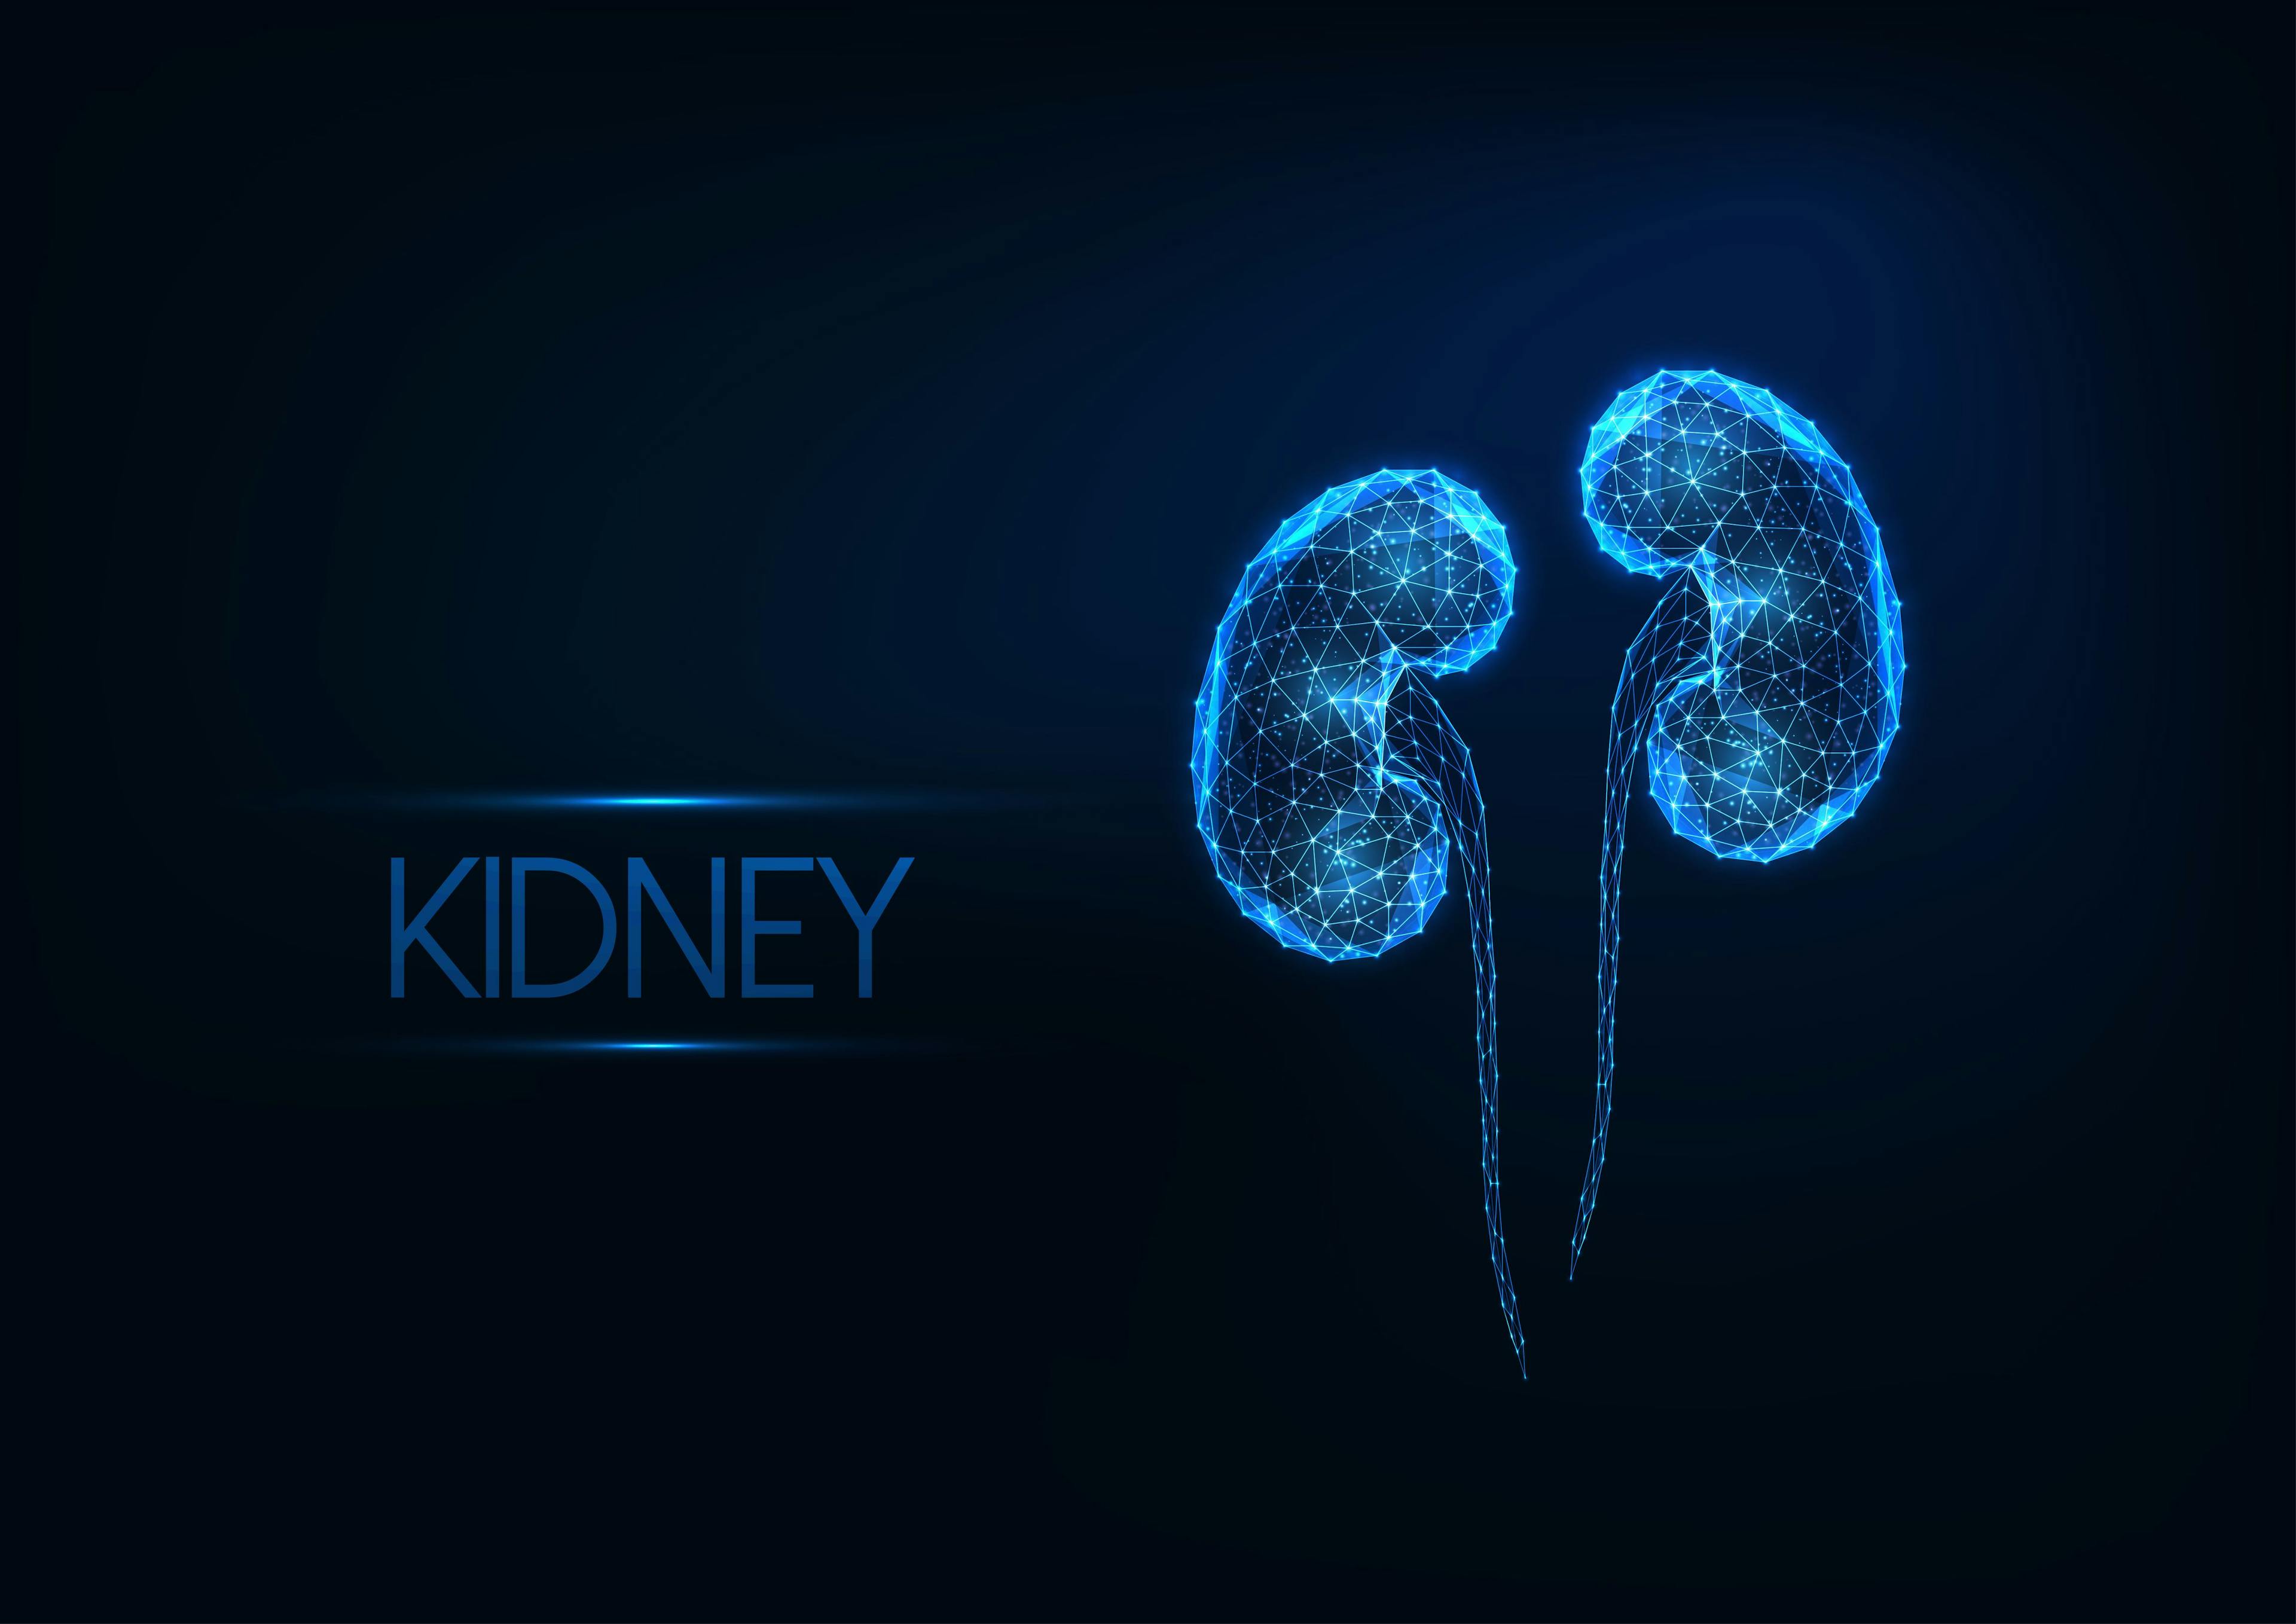 Kidney Concept Blue | image credit: Inna - stock.adobe.com